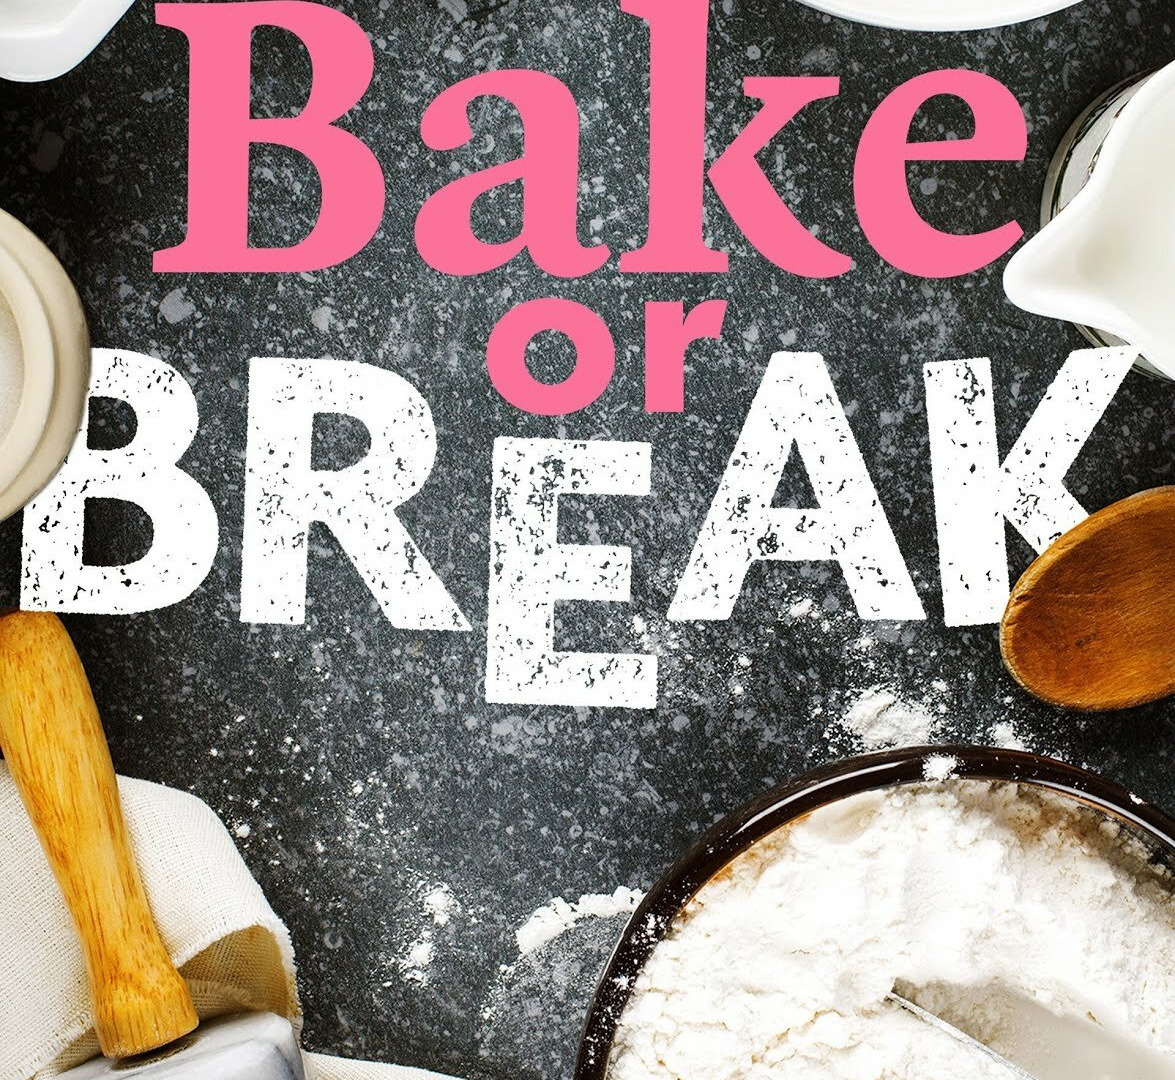 Show Bake or Break